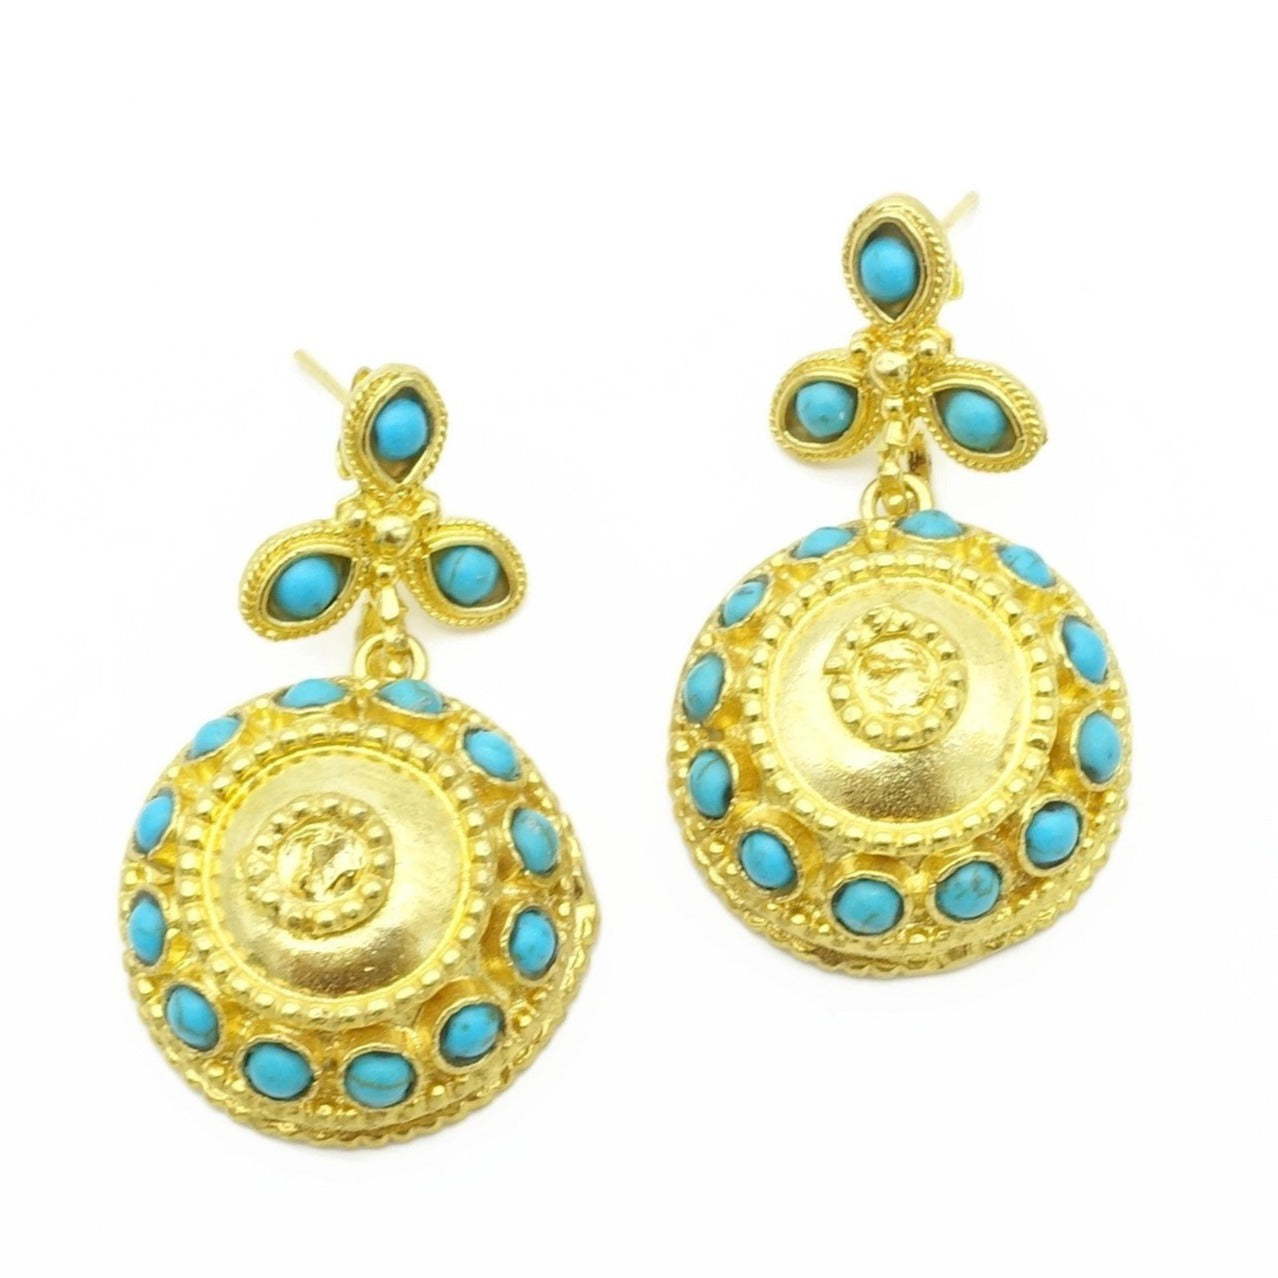 Aylas Turquoise earrings - 21ct Gold plated semi precious gemstone - Handmade